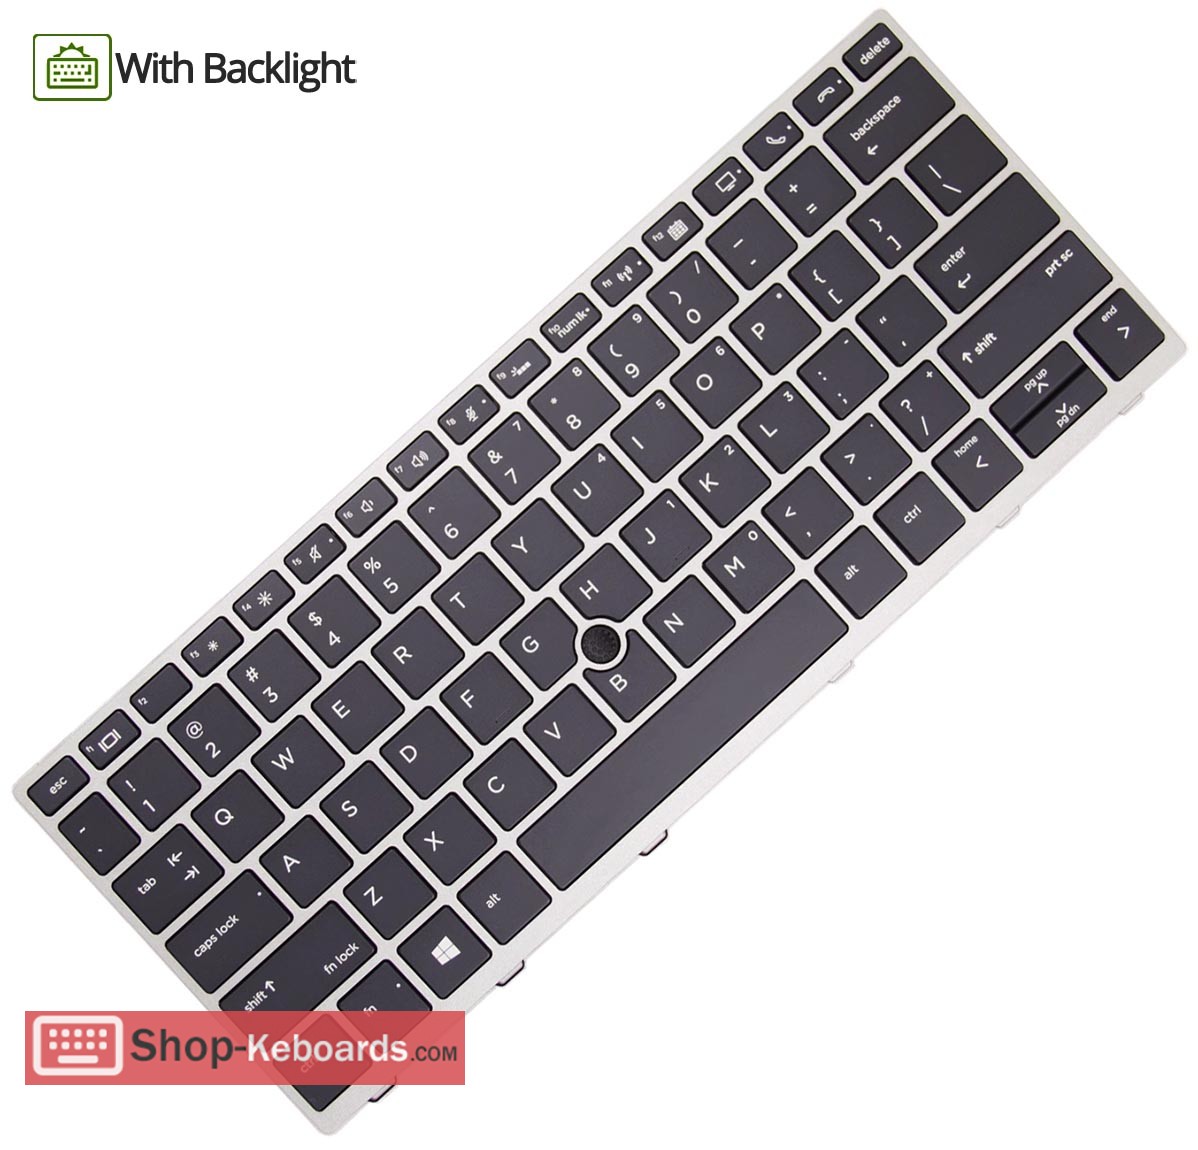 Sunrex V162726BK1 Keyboard replacement